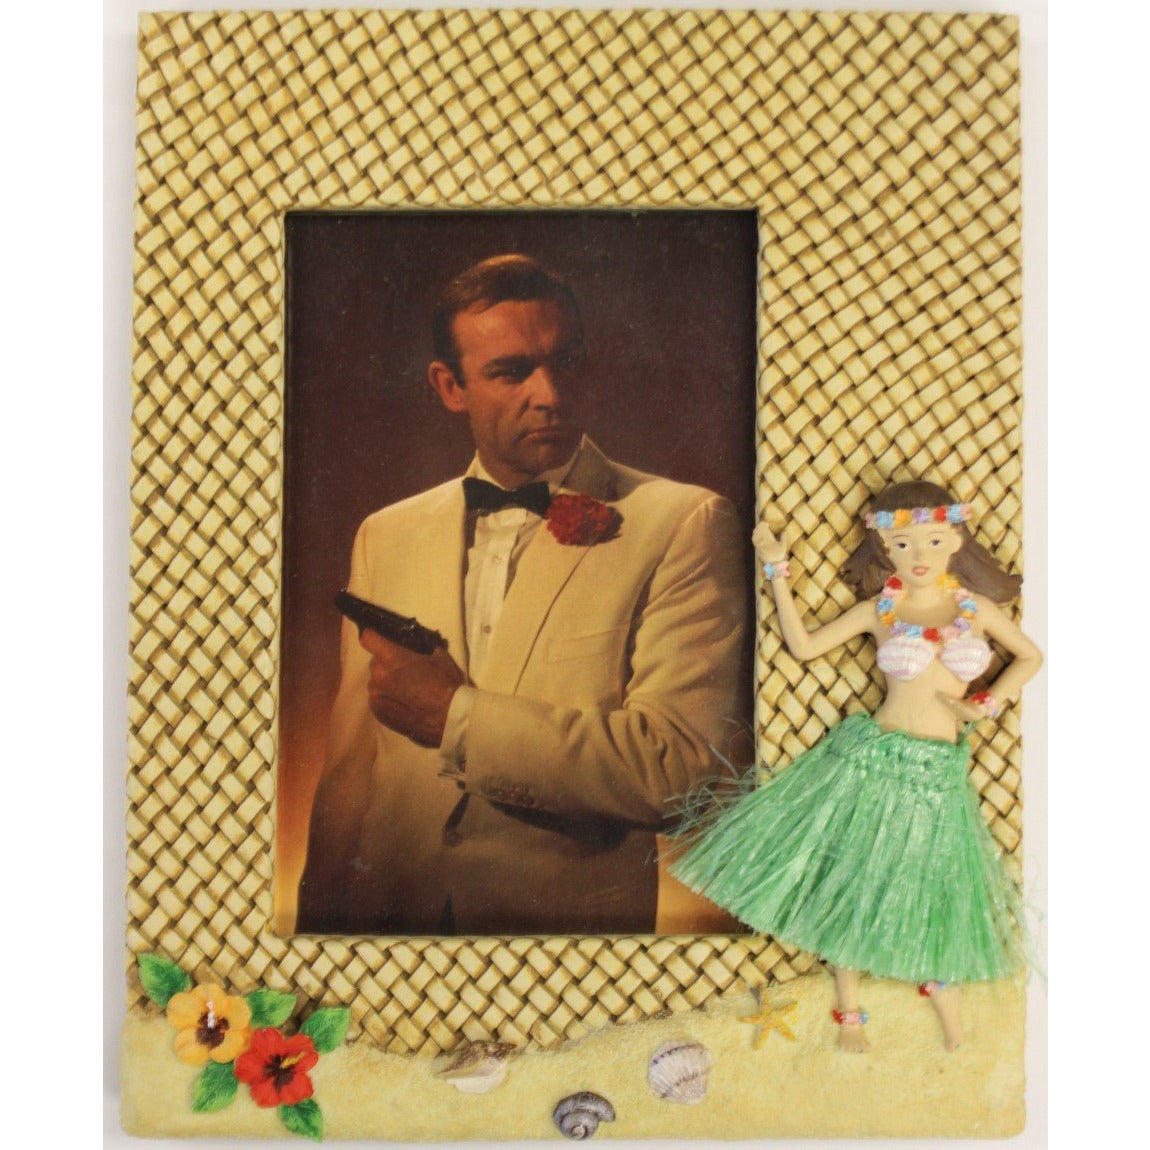 Hula Girl Photo Frame w/ Sean Connery as James Bond 007 Postcard